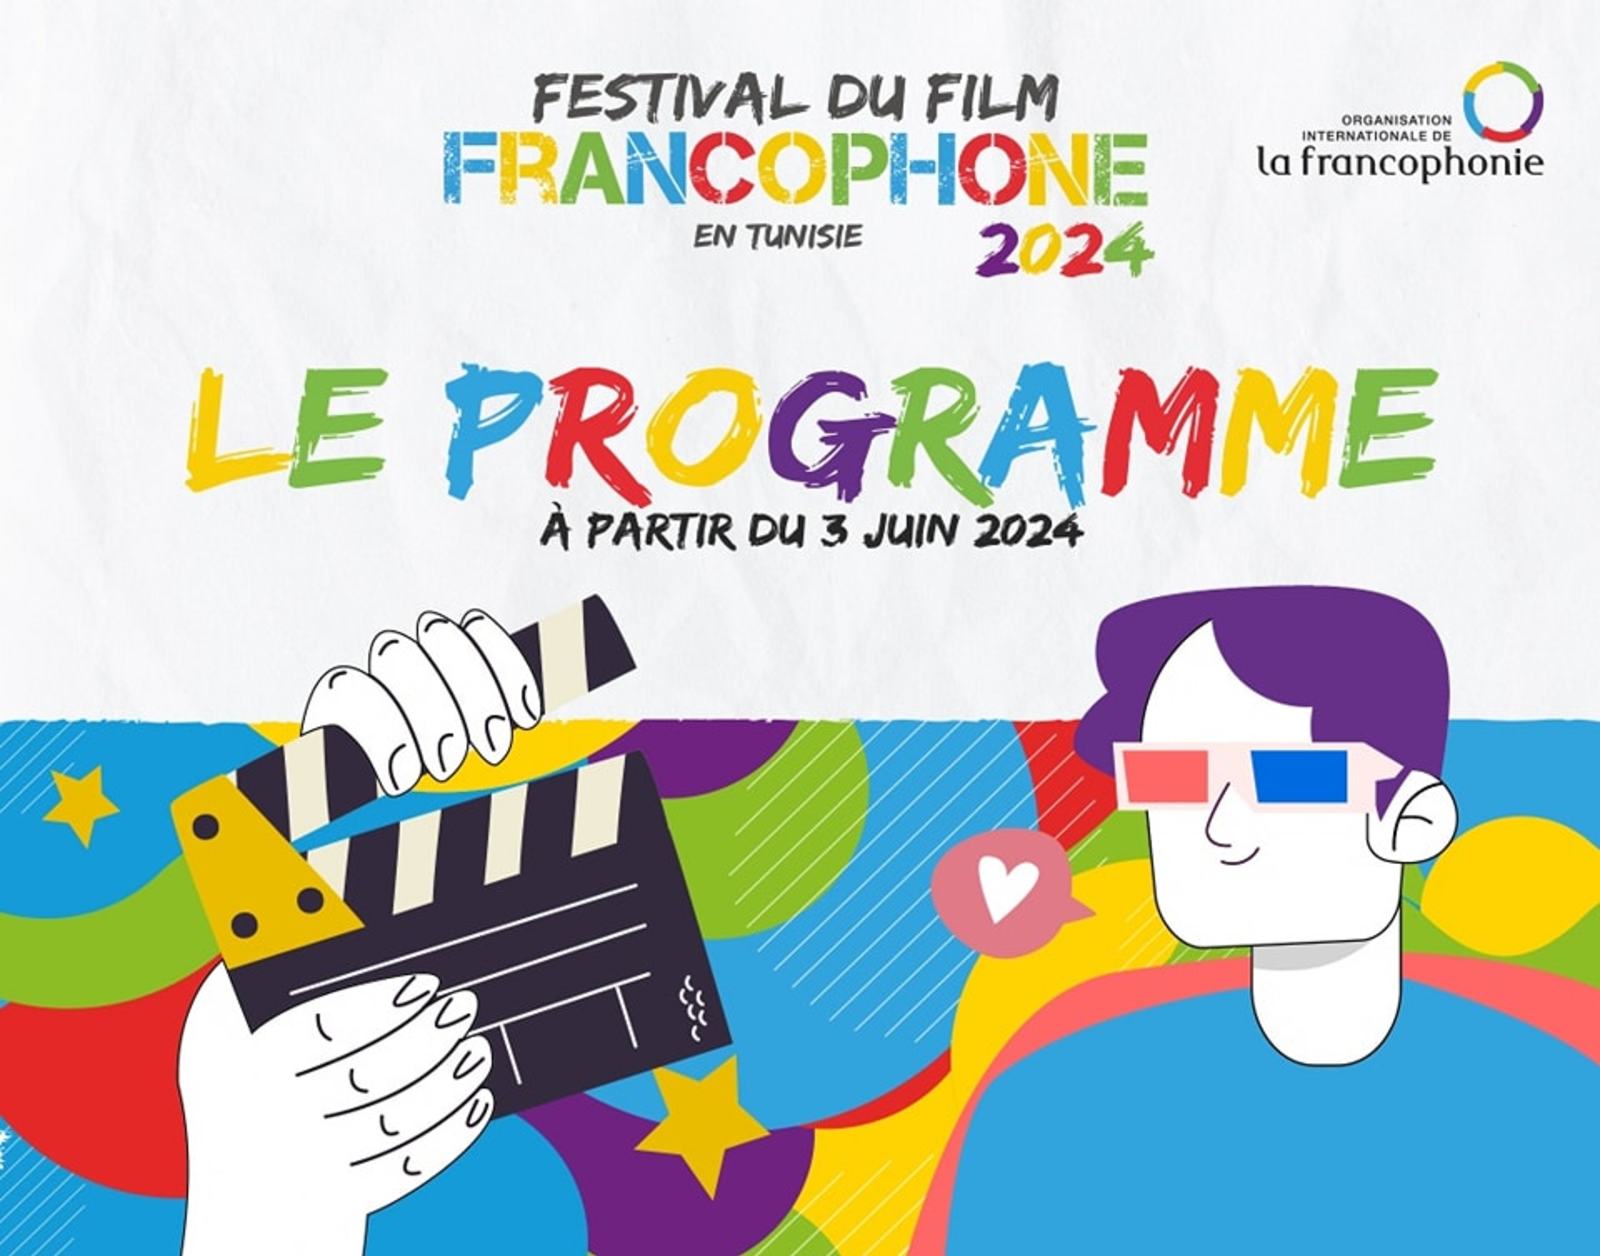 Participation of Bulgaria in the Francophone Film Festival in Tunis